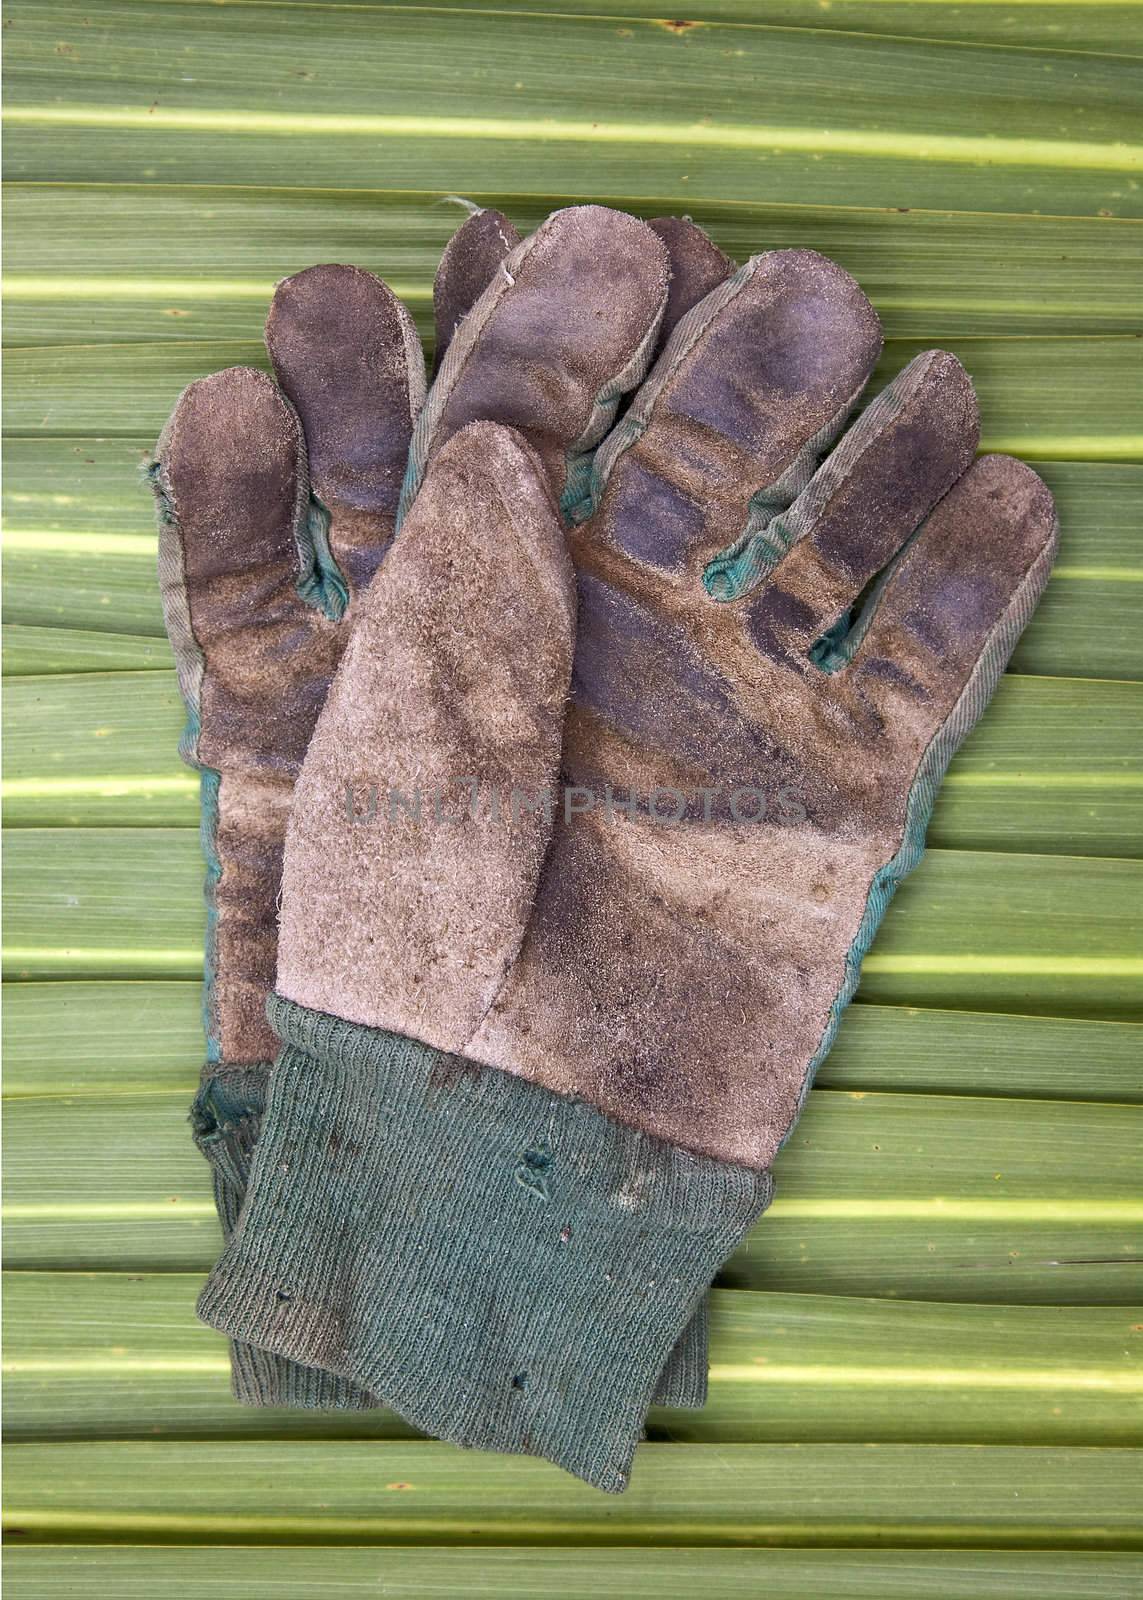 Old Gardening Gloves by grandaded